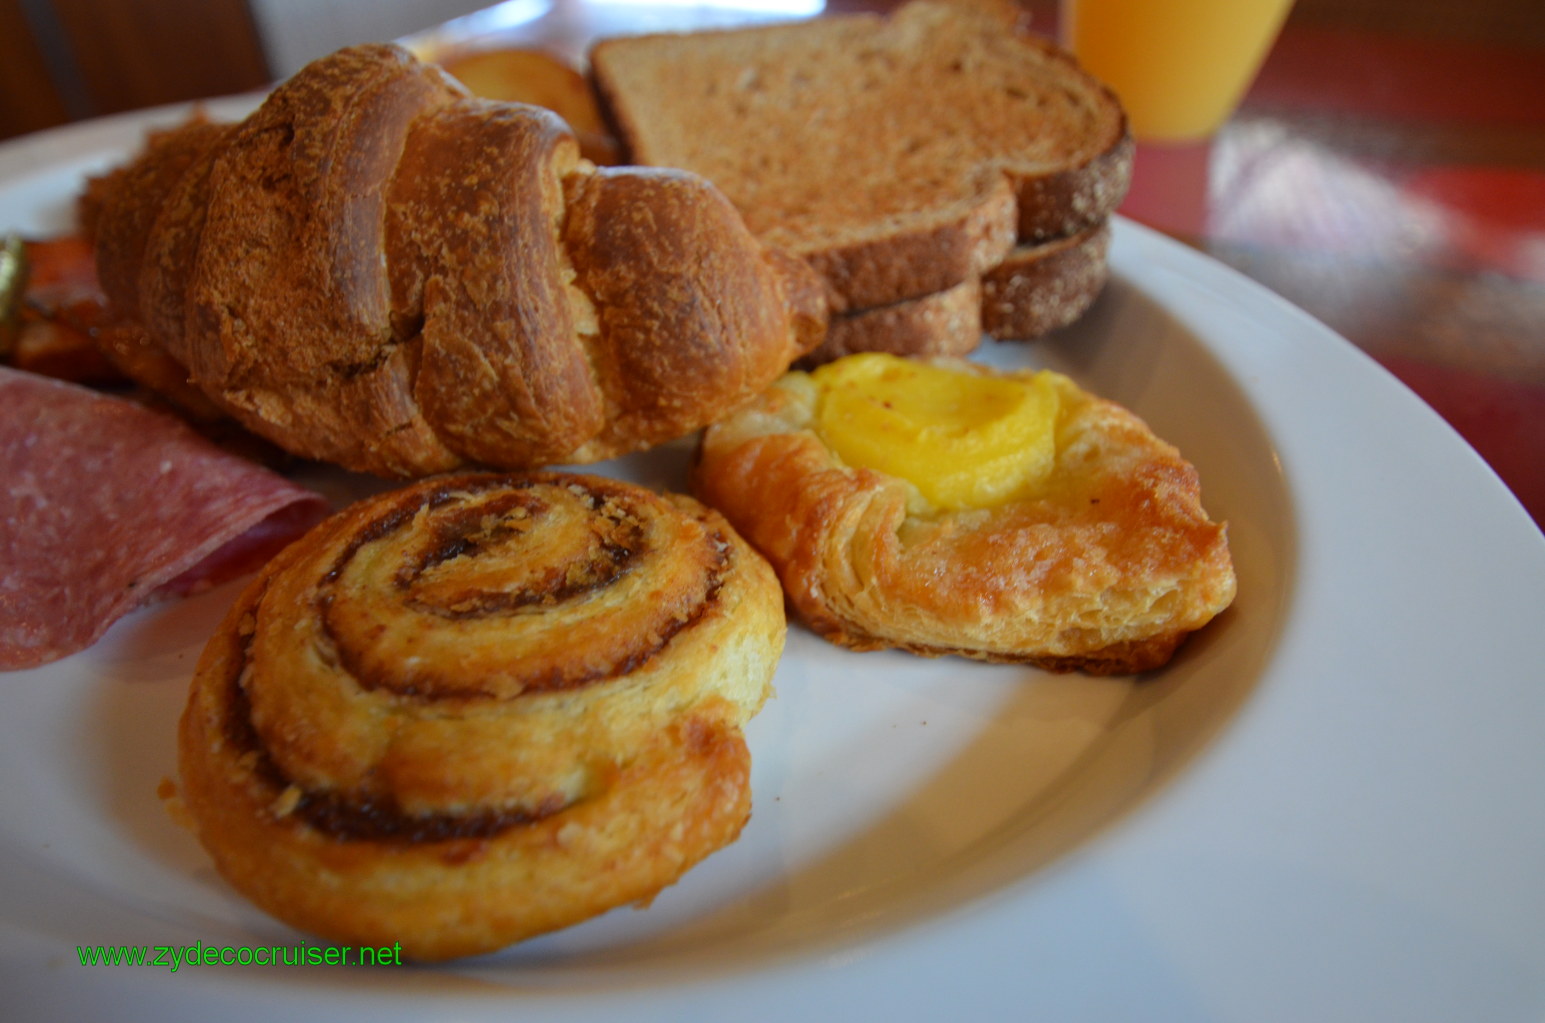 025: Carnival Conquest, Nov 18. 2011, Cozumel, Lido Breakfast, Croissant, Sweet Roll, Cinnamon Roll